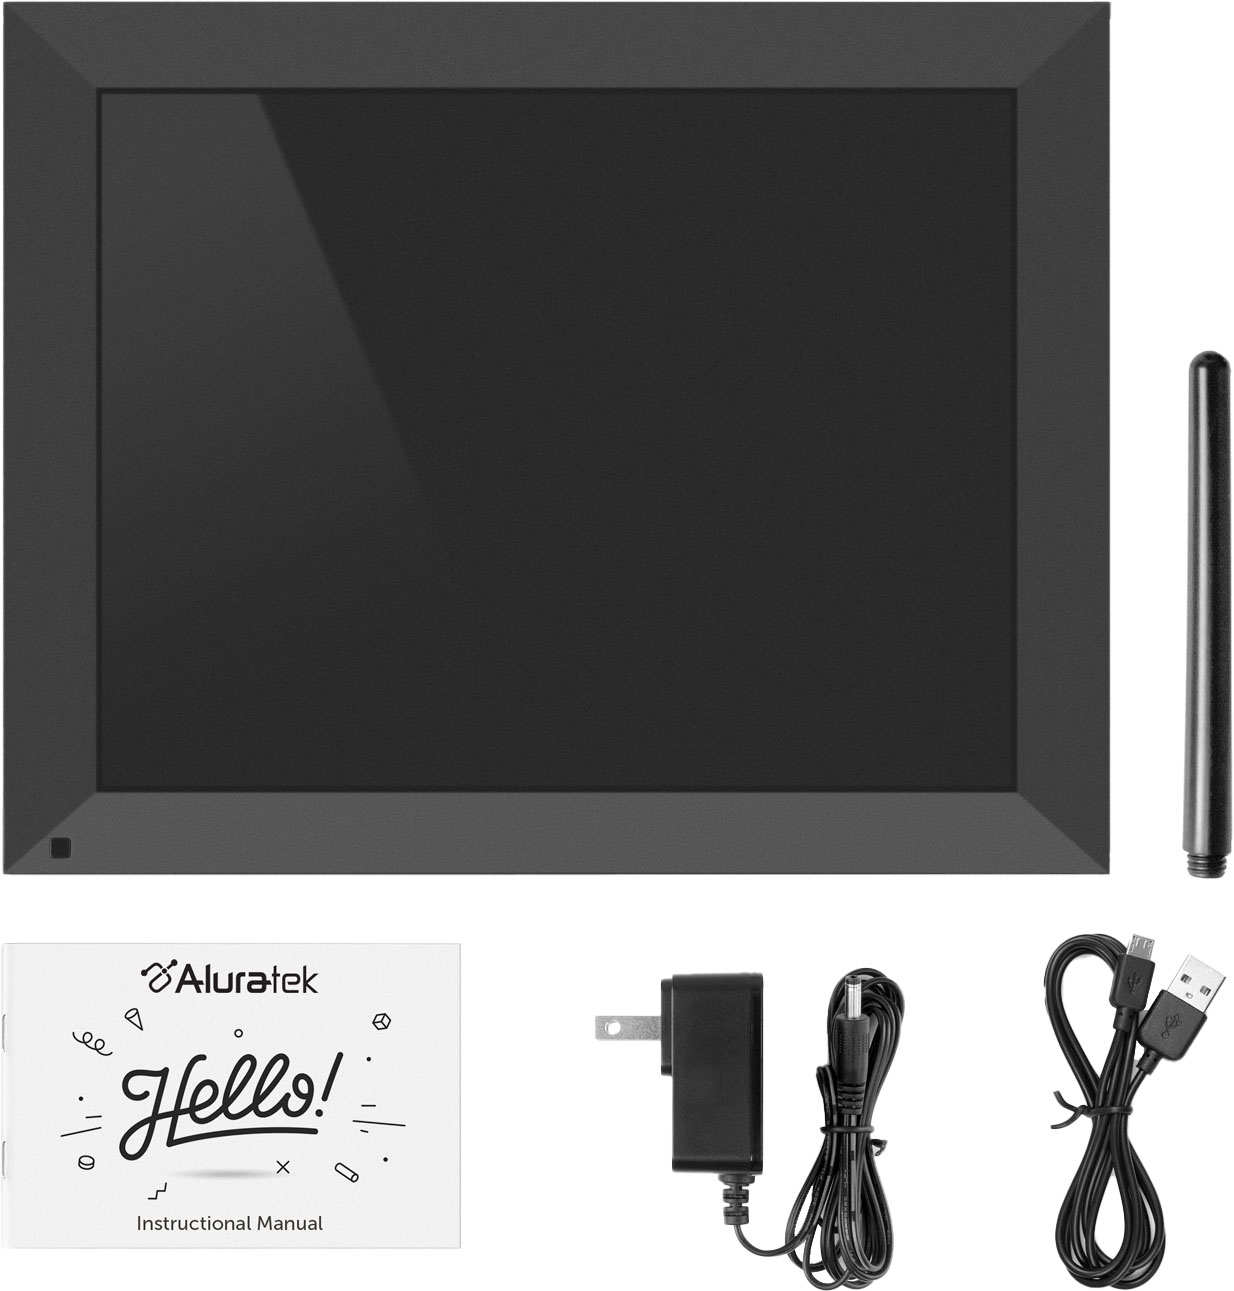 Best Aluratek 15" Touchscreen LCD Wi-Fi Photo Frame Black AWS215F